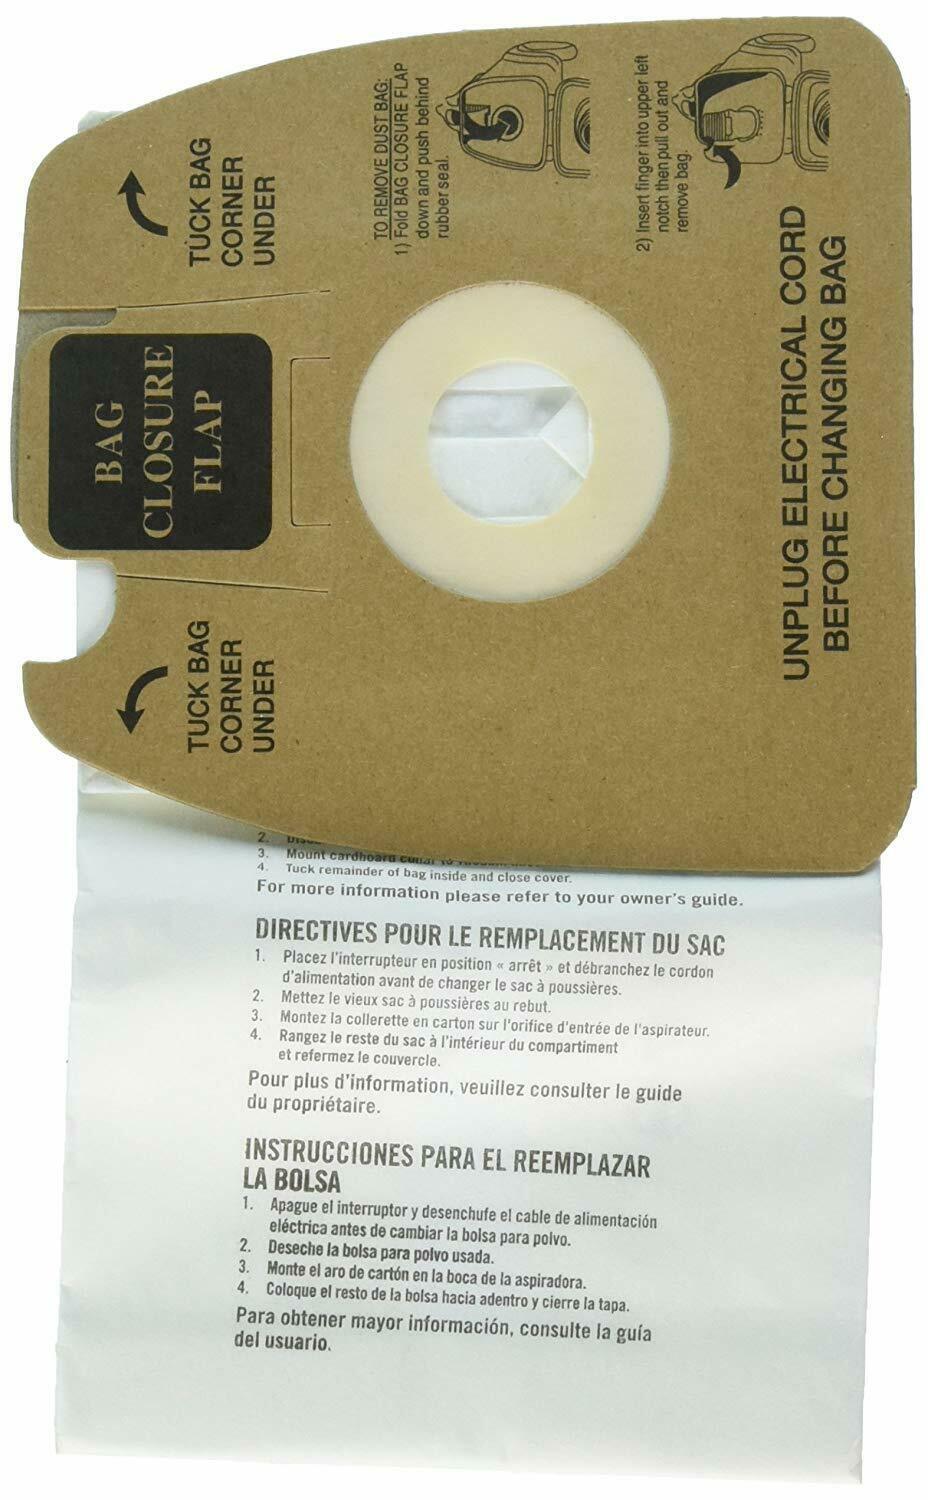 Genuine Eureka Sanitaire MM Premium Allergen Bags 63253A-10 [Single Loose Bag] - $7.17